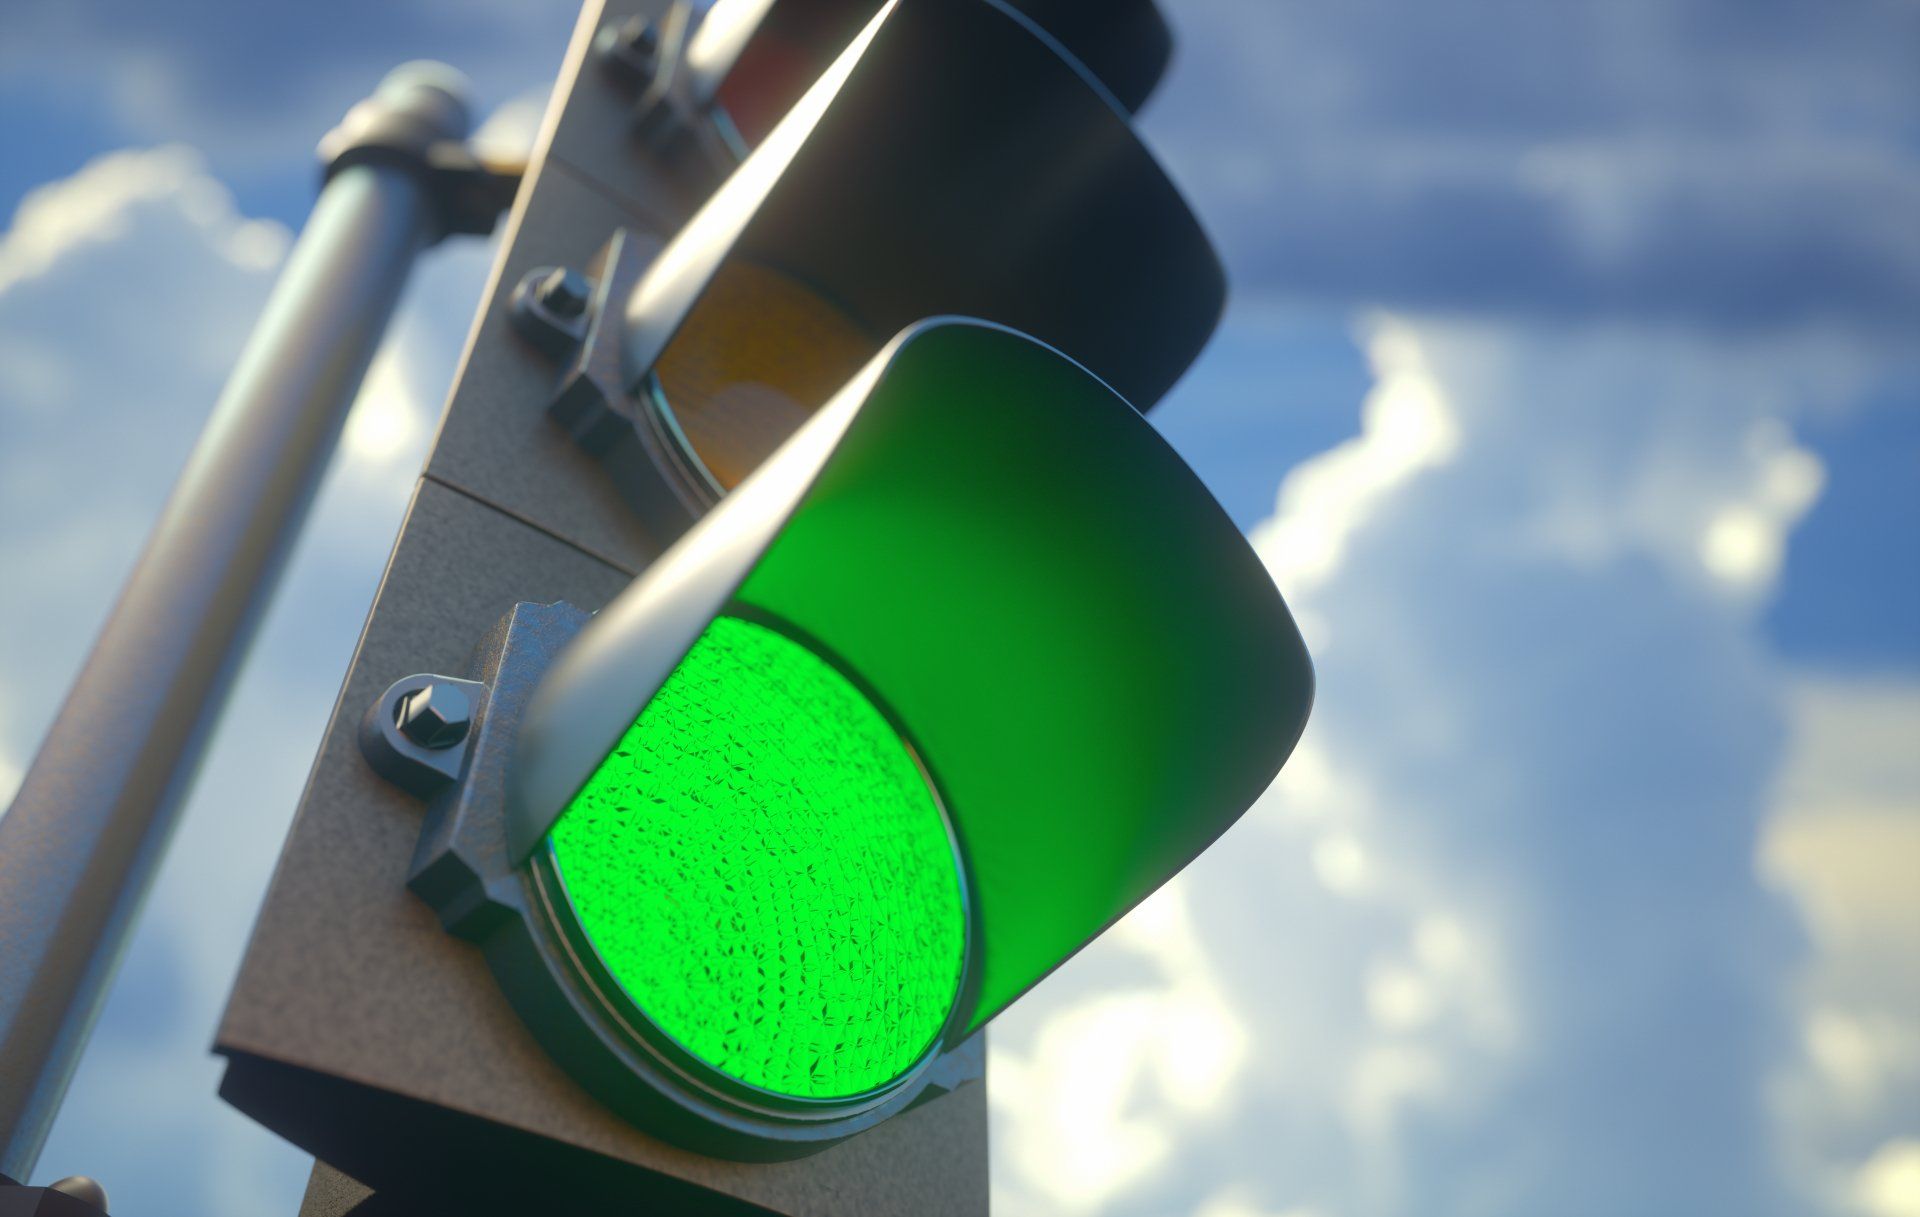 green light on a traffic signal